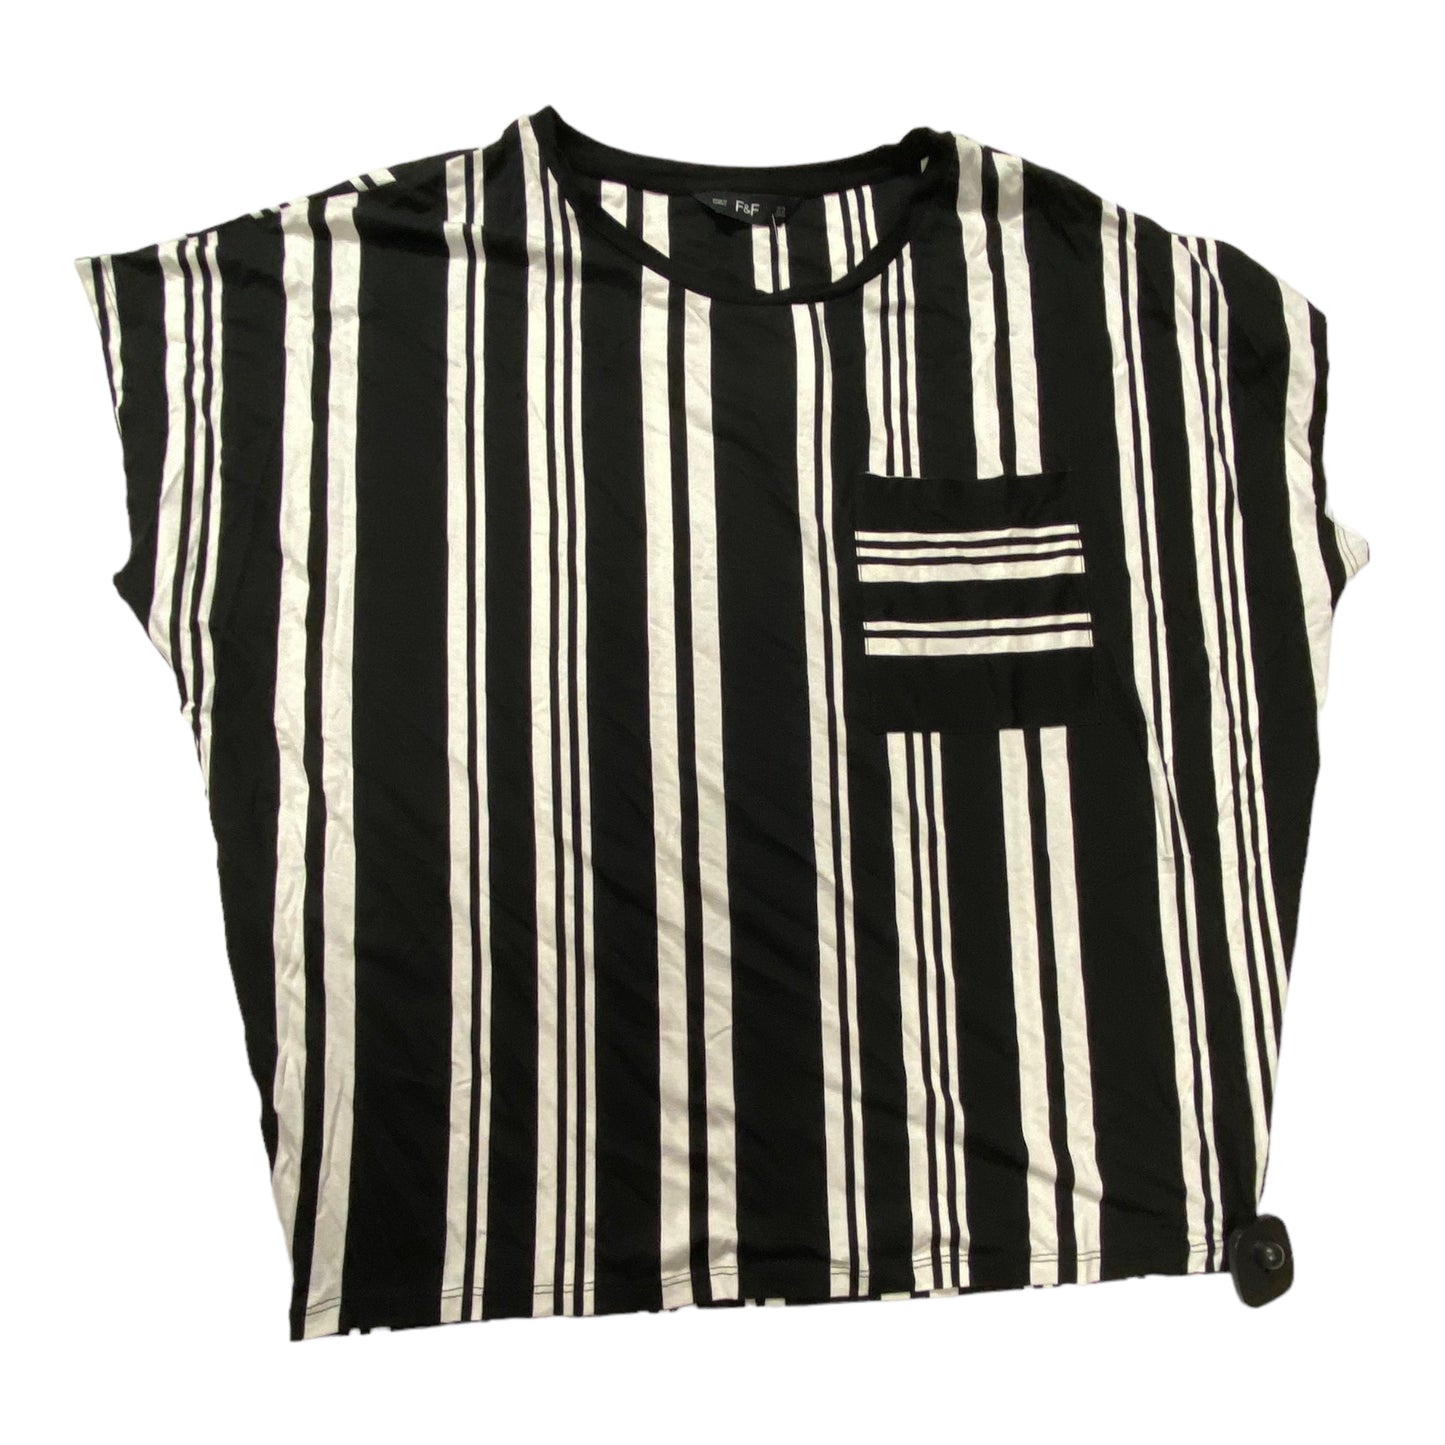 Black & White Top Short Sleeve F&f, Size 12